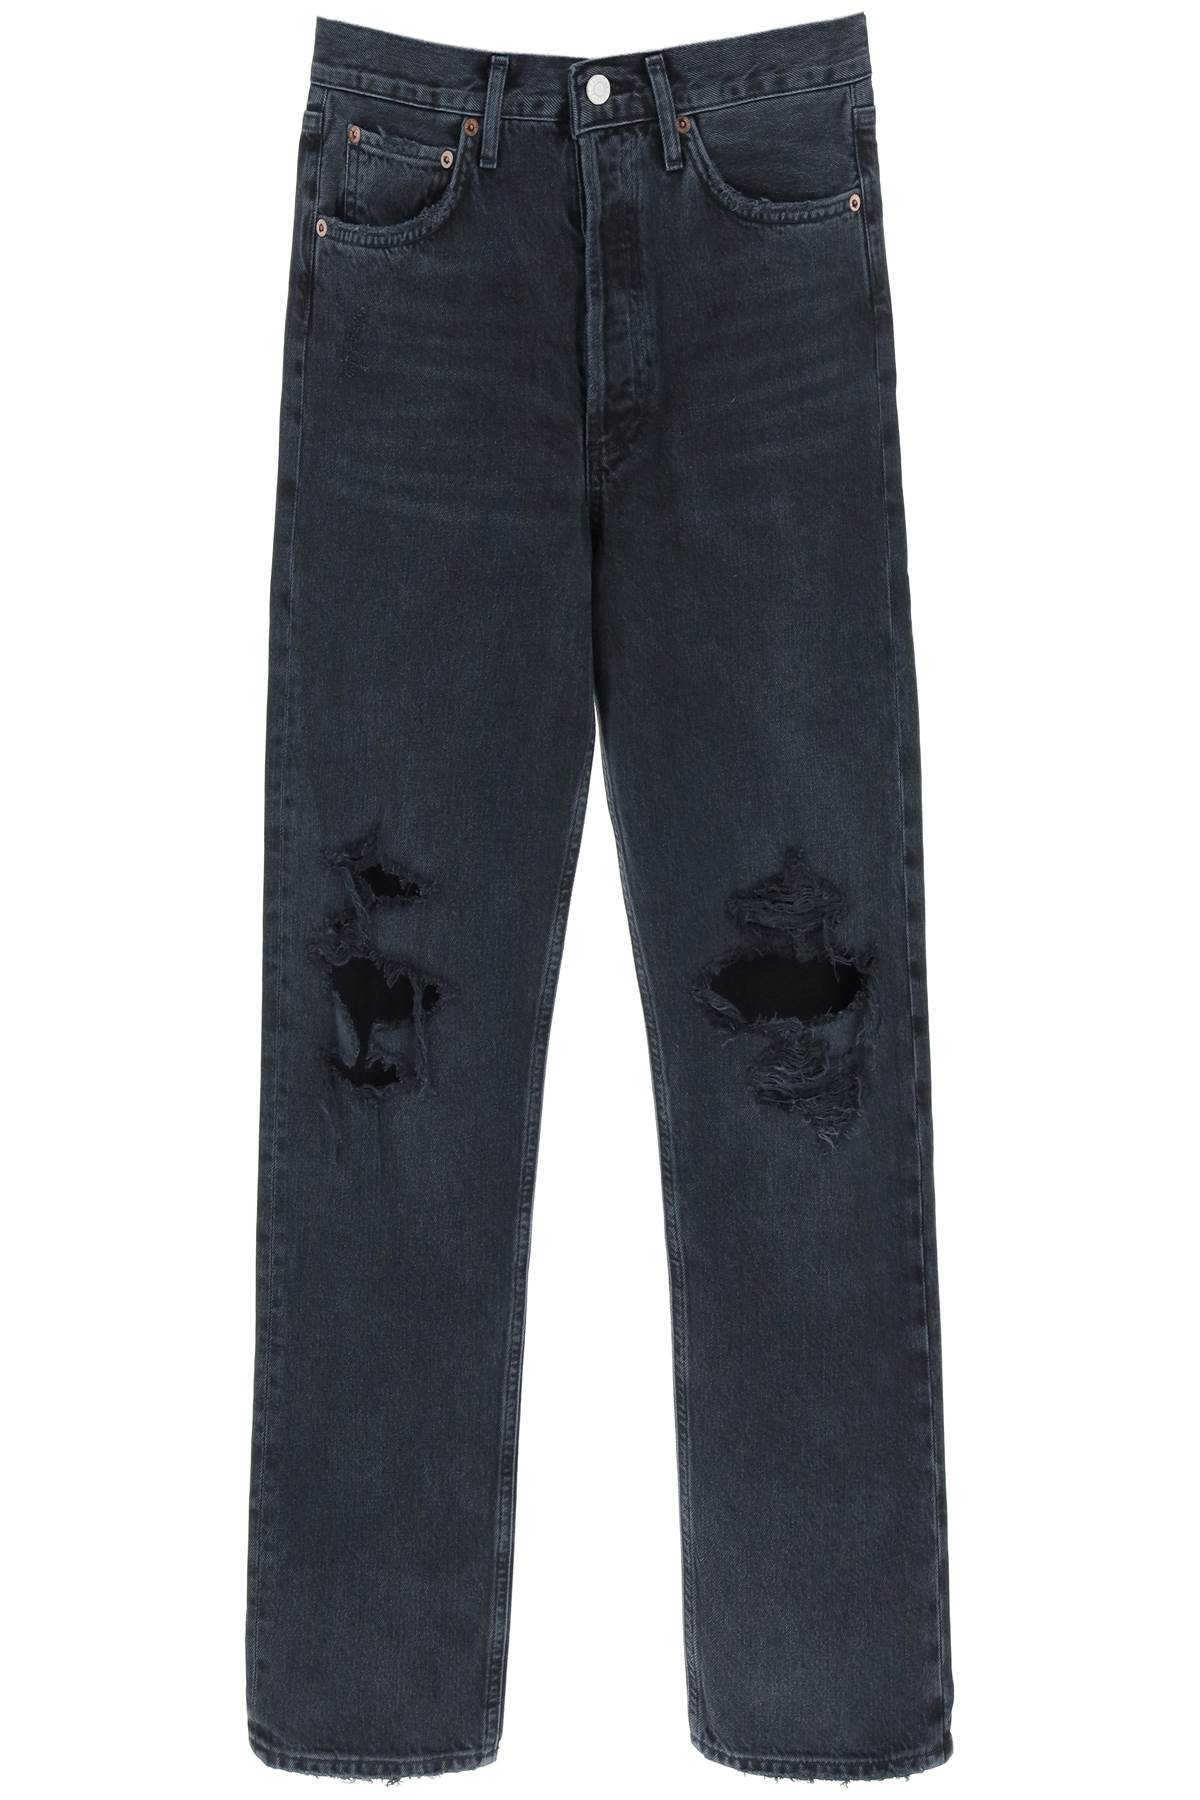 AGOLDE 90s Organic Cotton Jeans